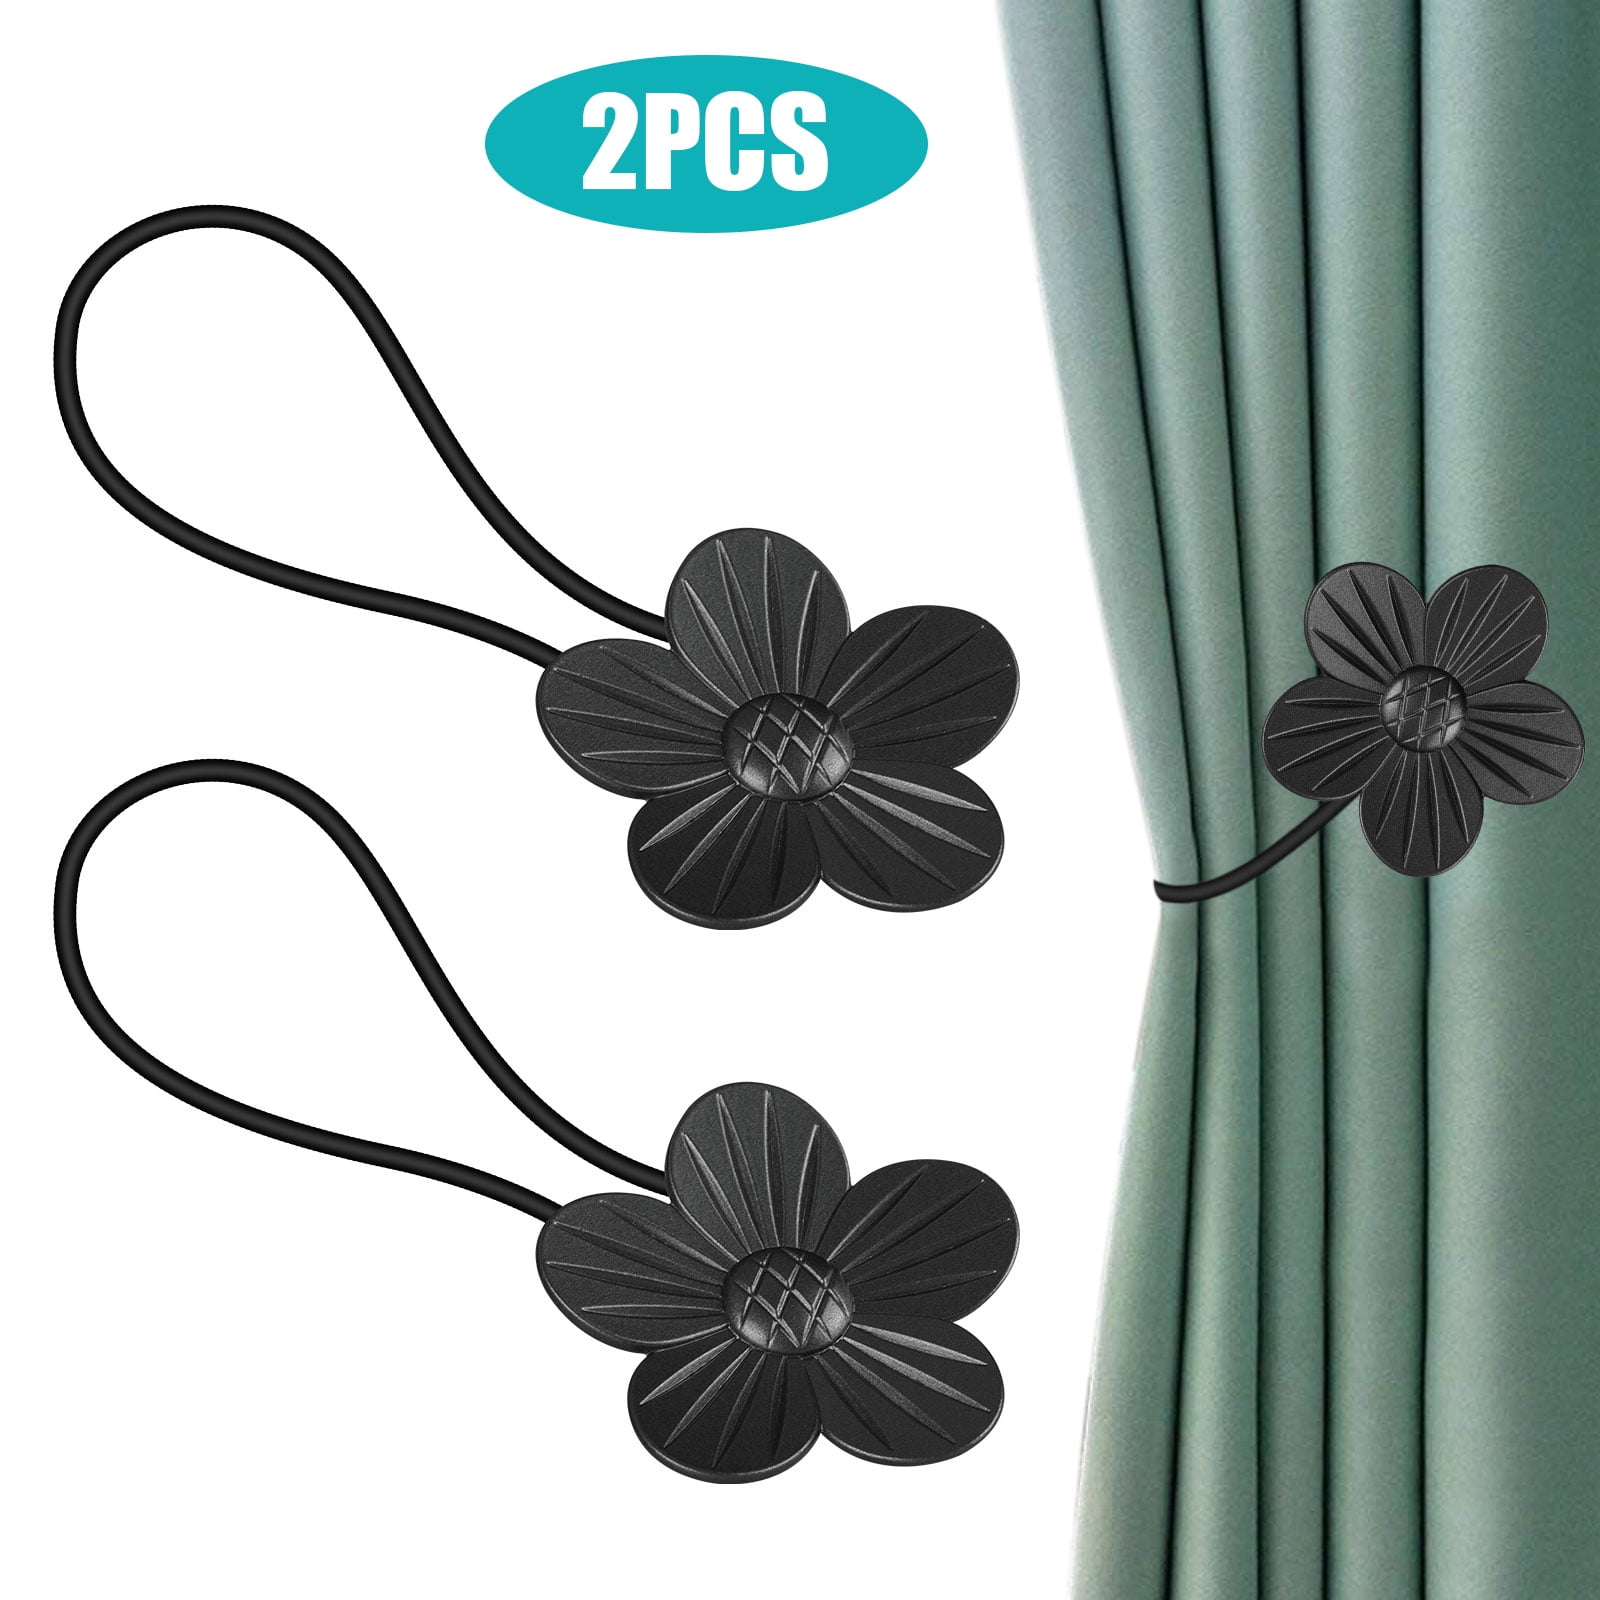 Buy Creation Magnetic Curtain Tiebacks, 2PCS Magnetic Curtain